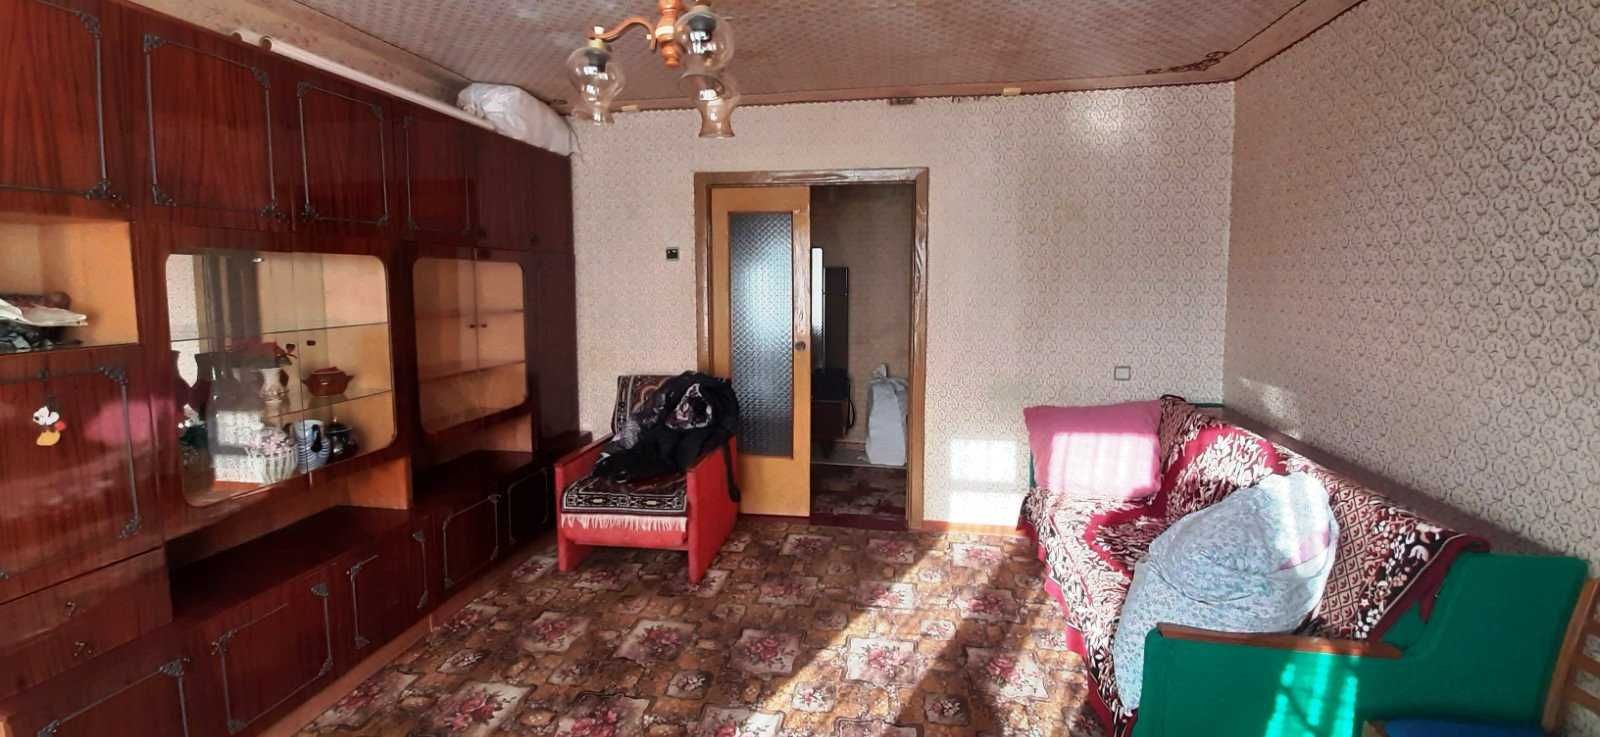 Продам 2 комн квартиру Приднепровск